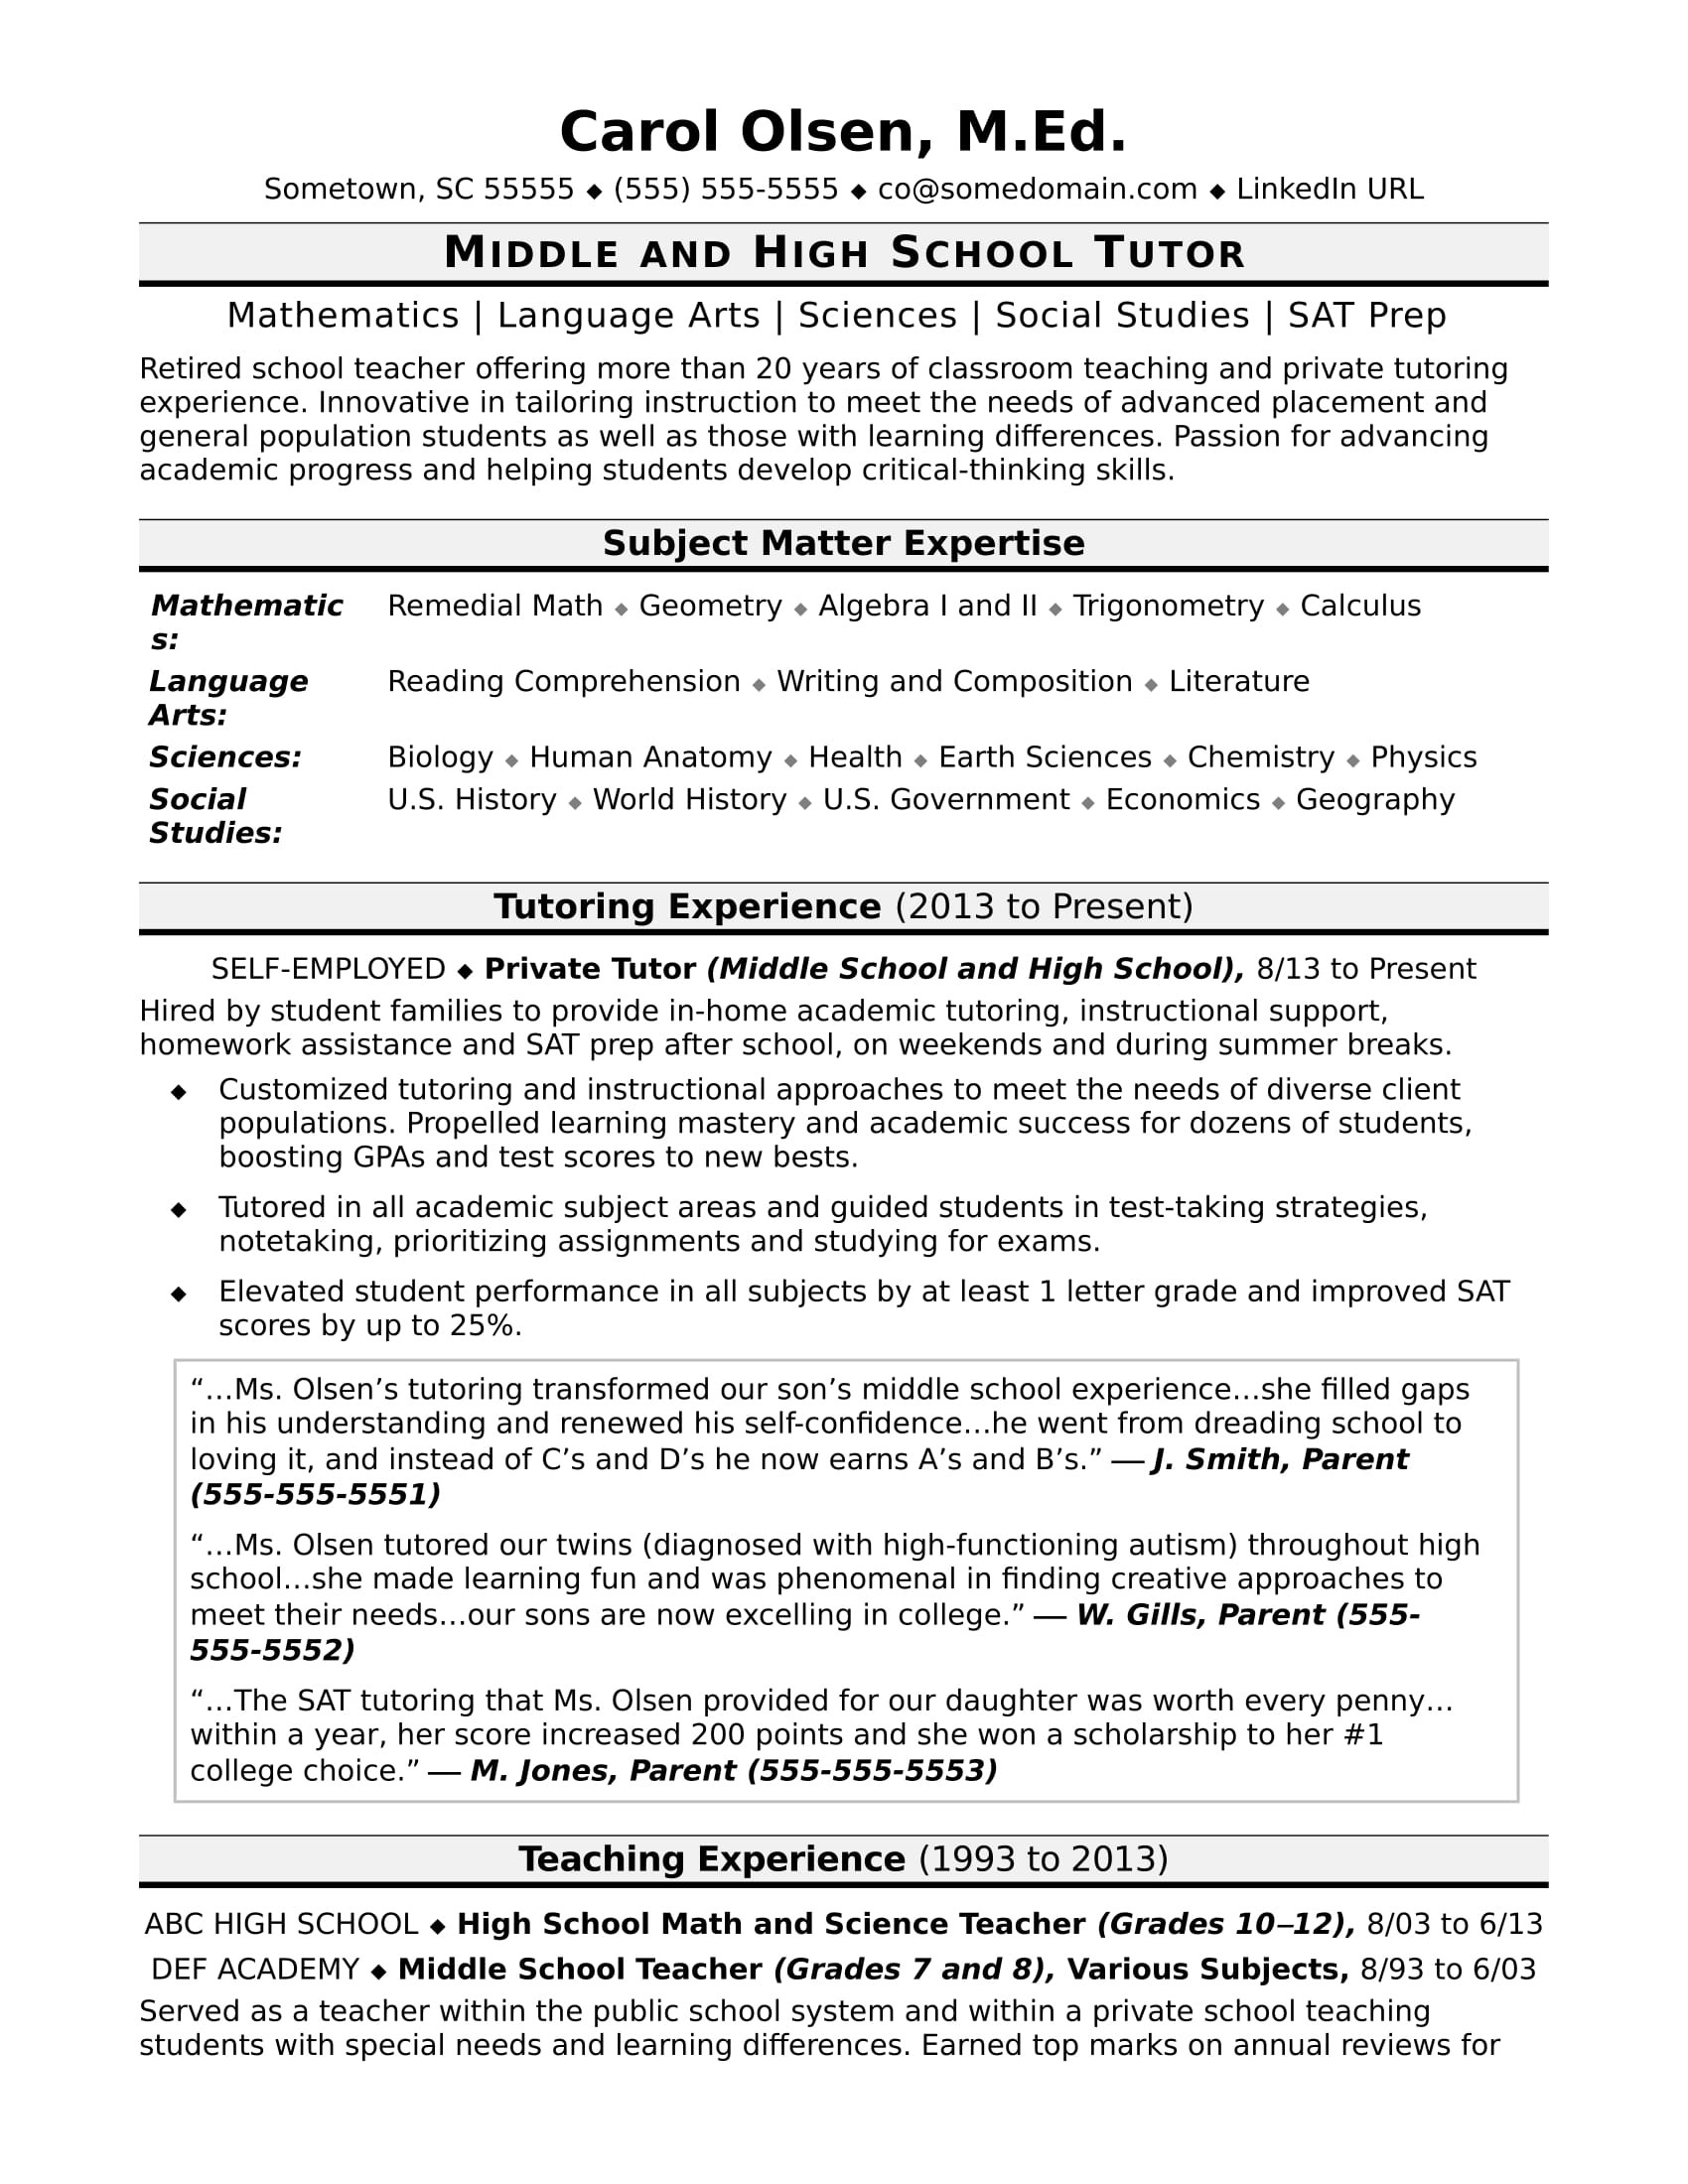 Math Tutor Sample Resume No Experience Tutor Resume Monster.com